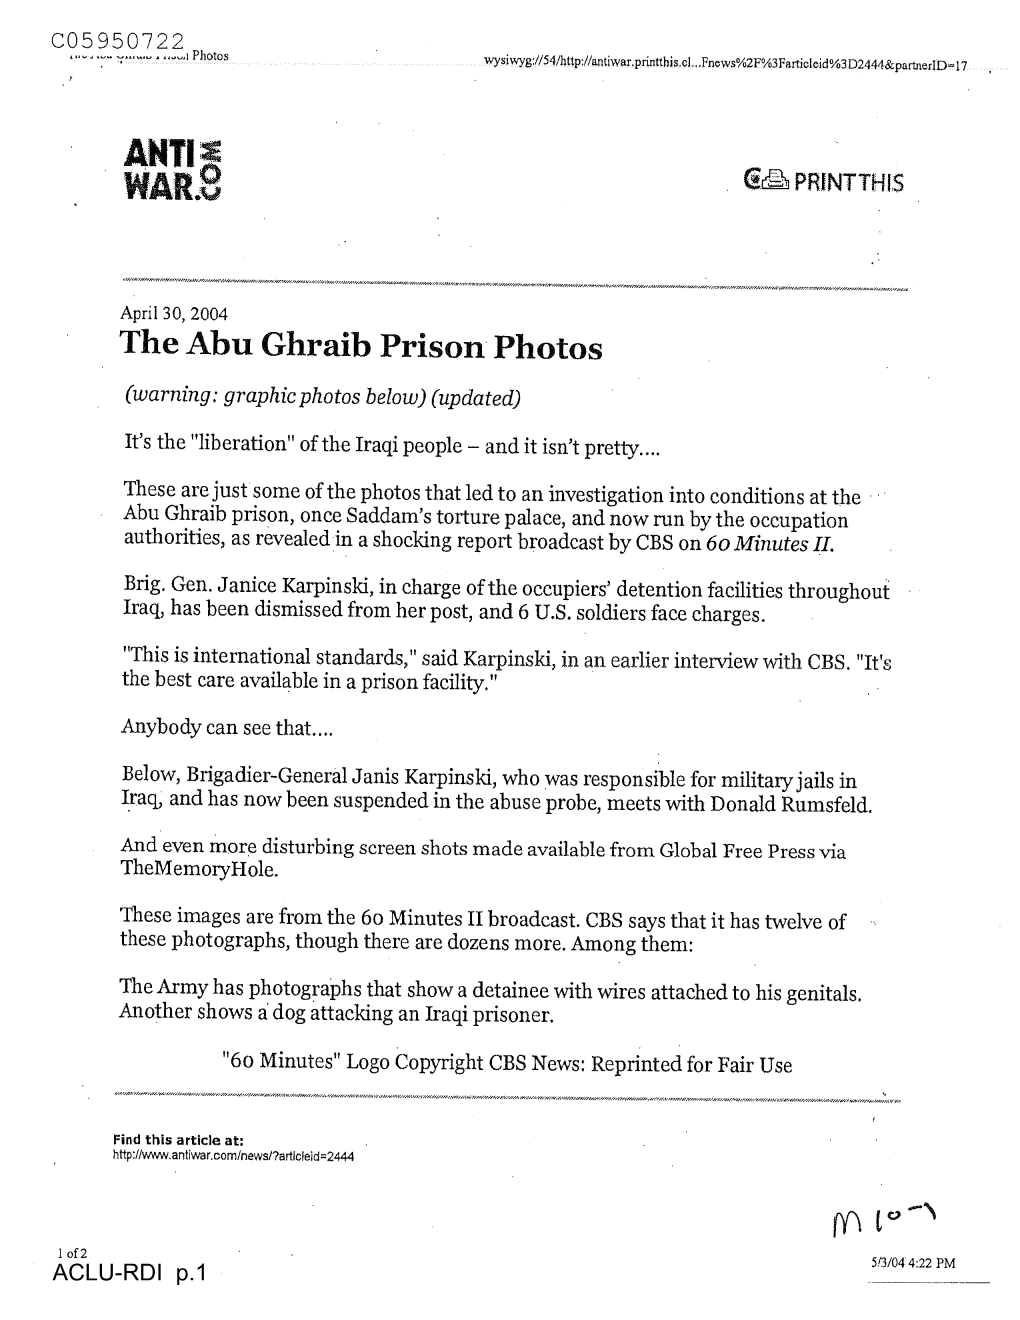 The Abu Ghraib Prison Photos (Warning: Graphic Photos Below) (Updated)